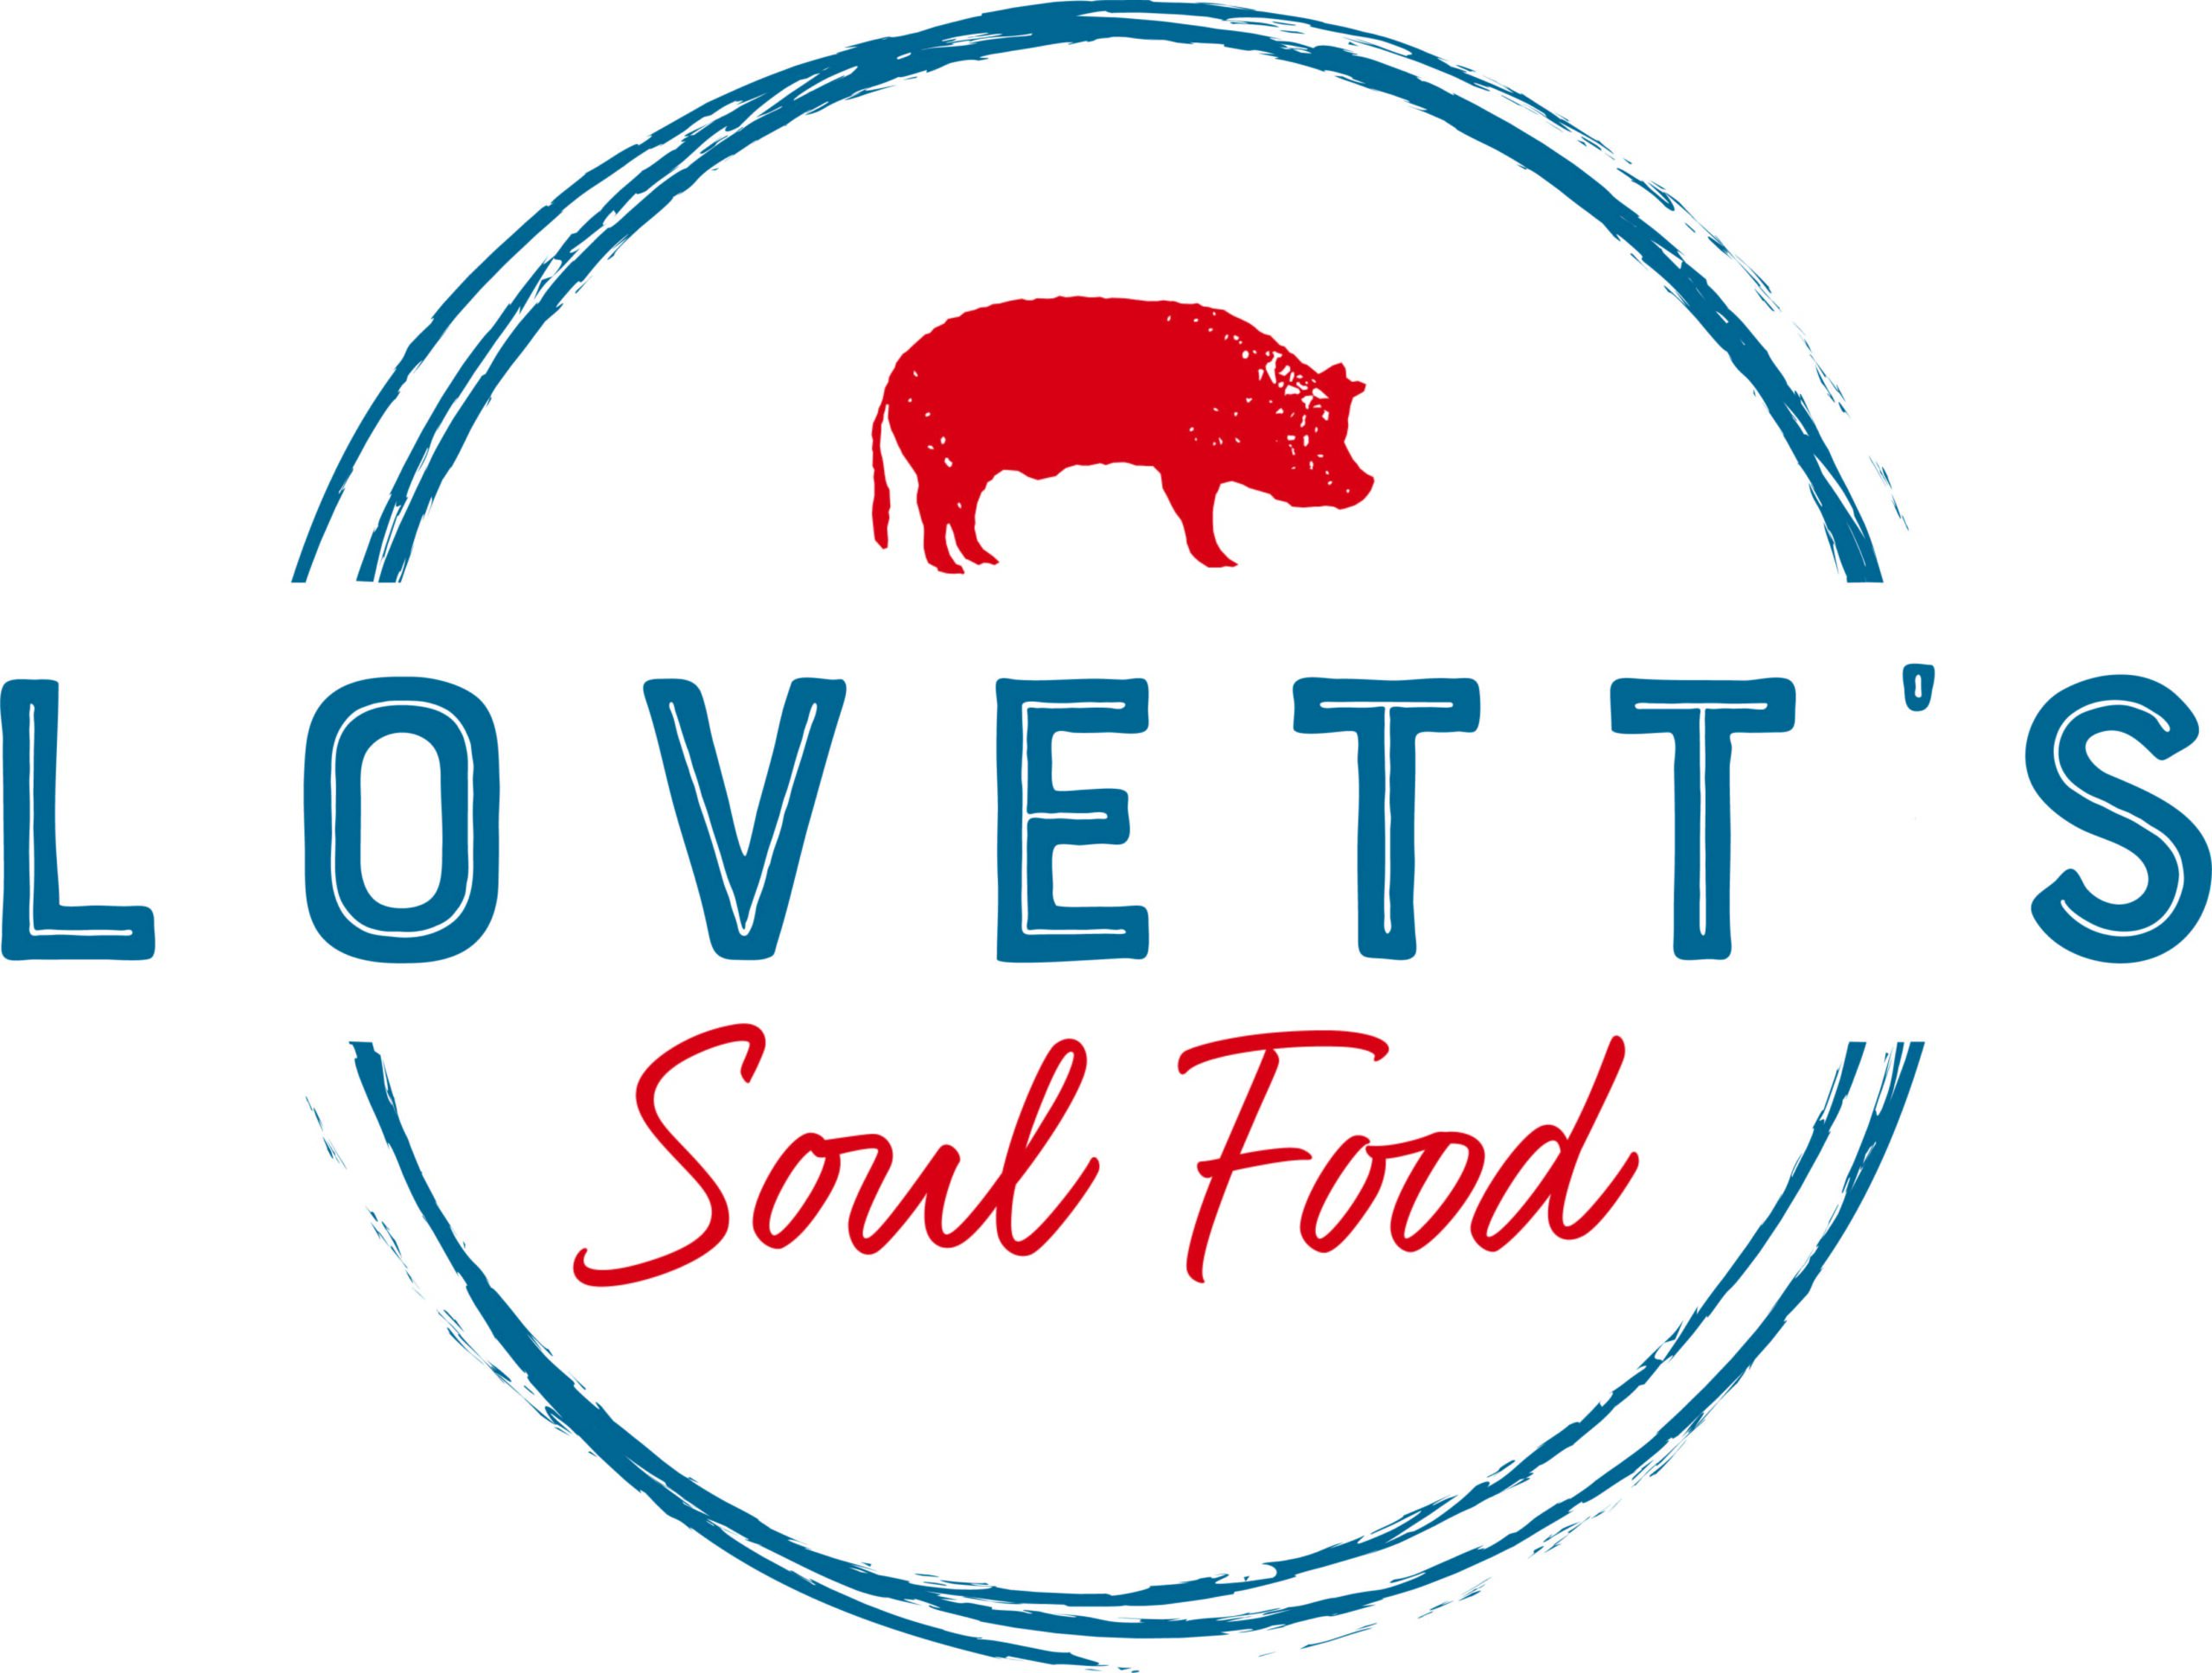 Lovetts Soul Food Restaurant  Modern Badge and Pig Icon Logo Design 